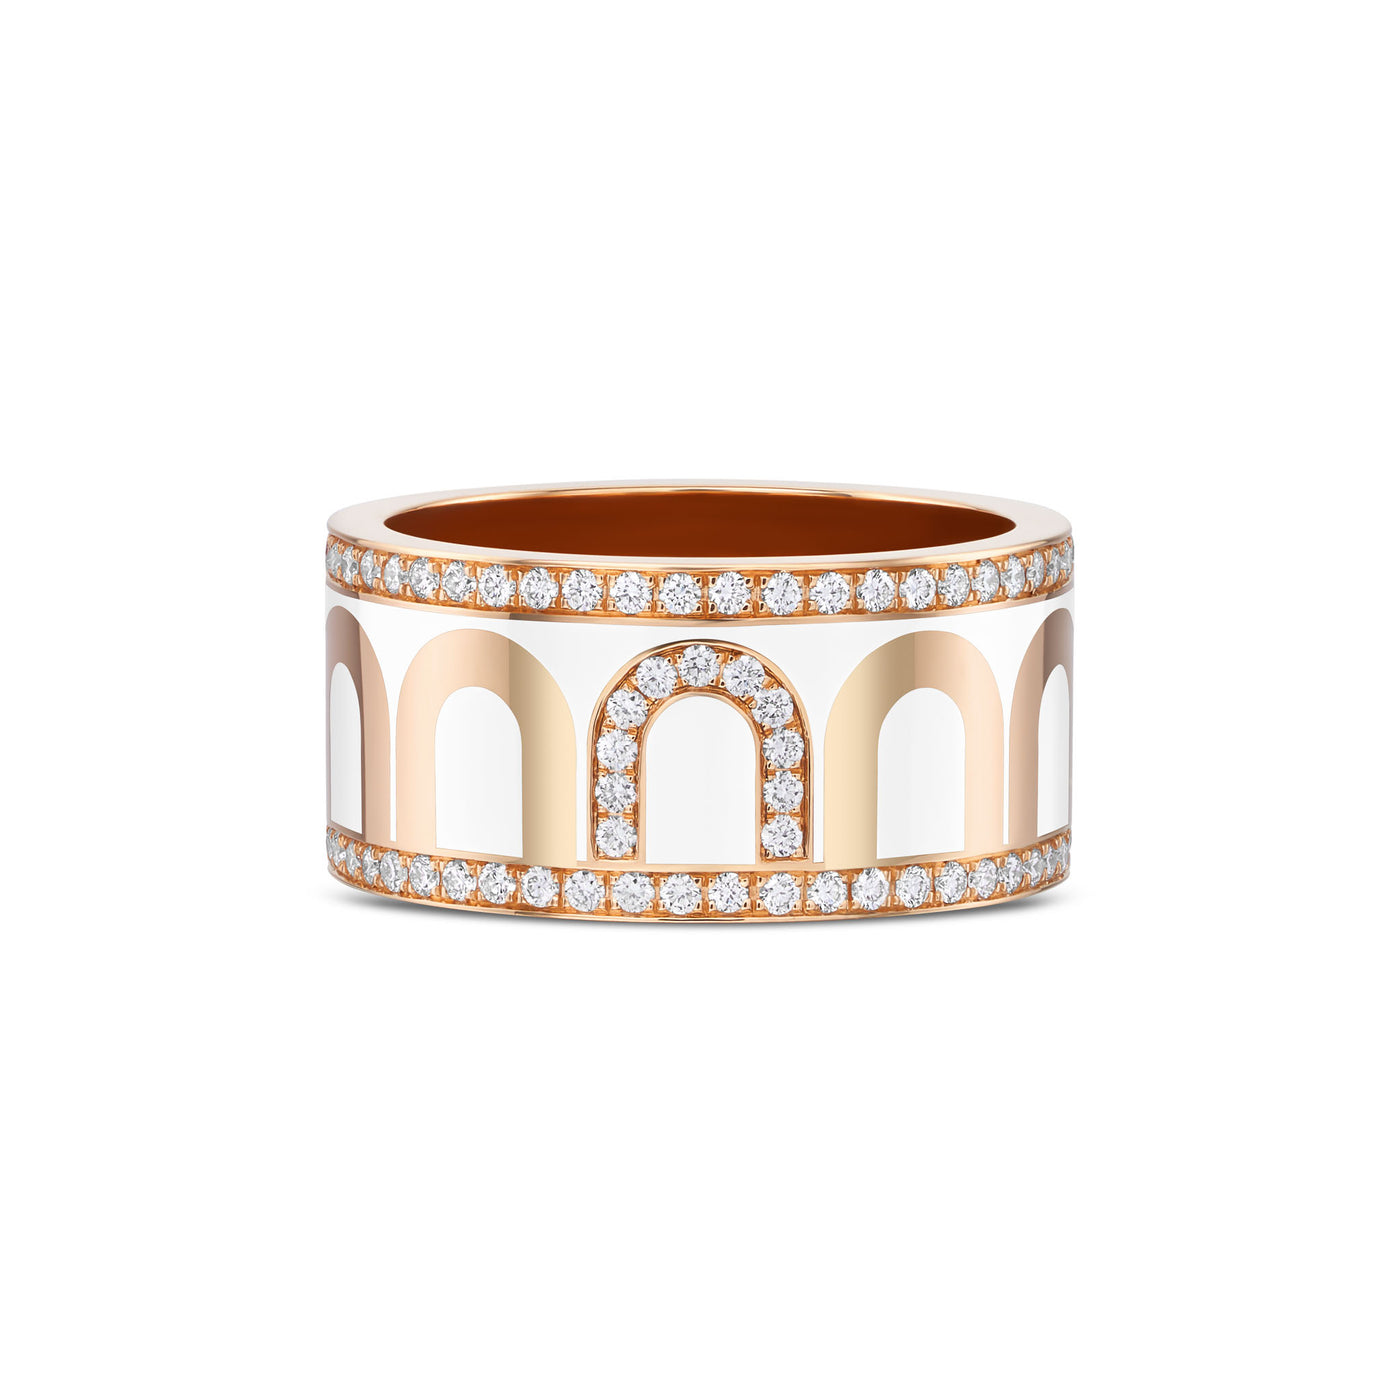 L'Arc de DAVIDOR Ring GM, 18k Rose Gold with Neige Lacquered Ceramic and Porta Diamonds - DAVIDOR